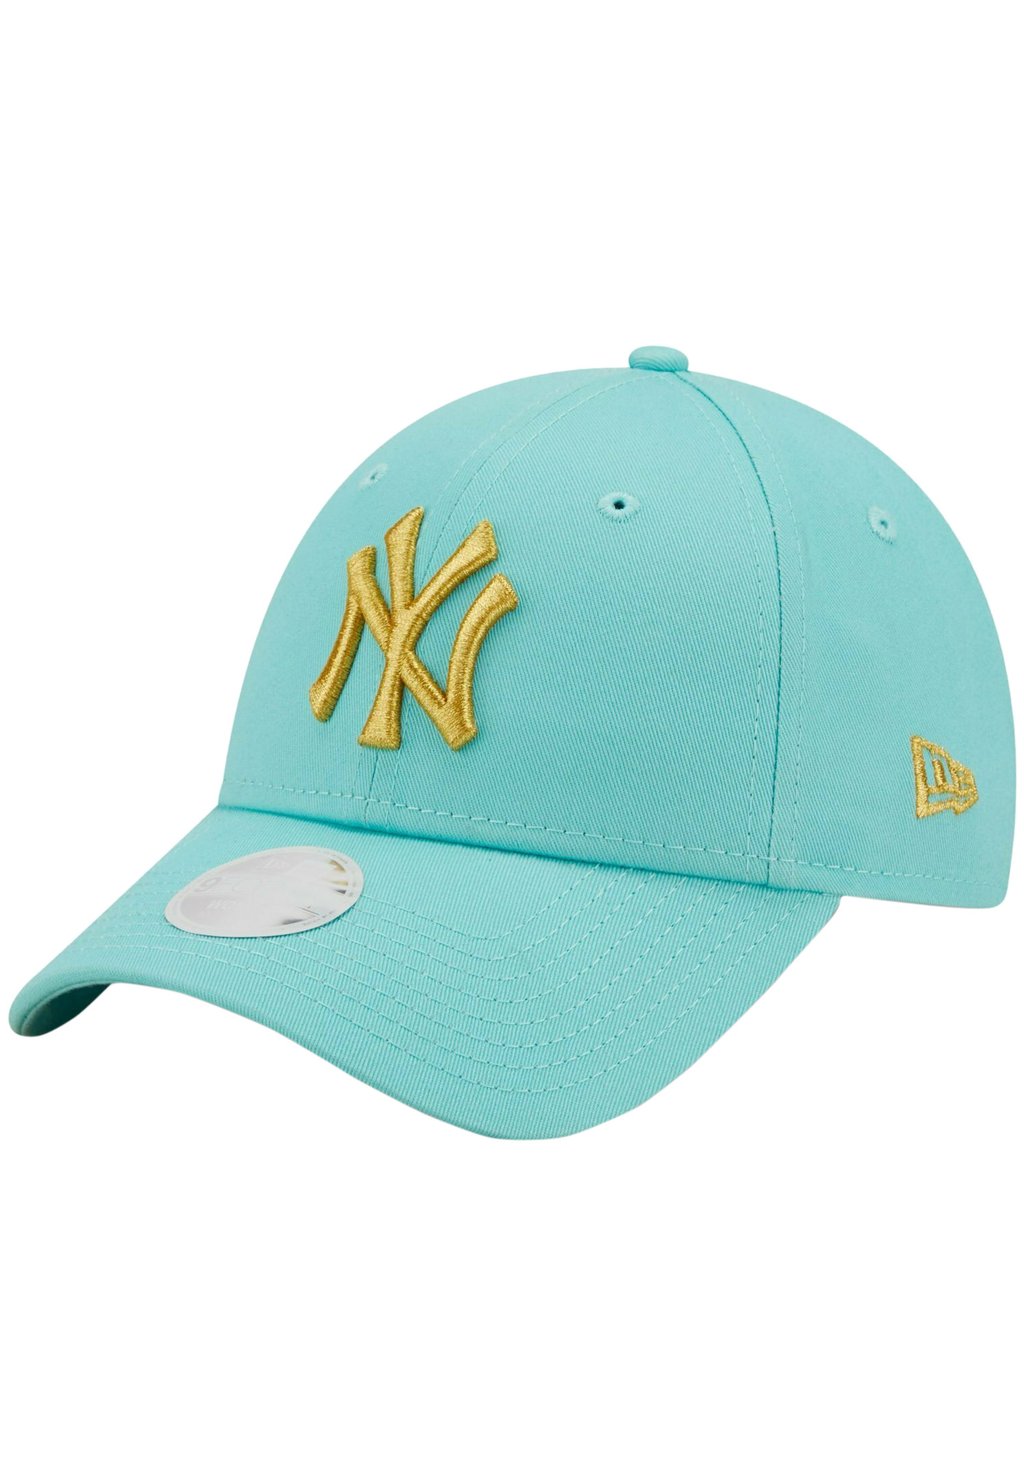 Бейсболка 9FORTY METALLIC NEW YORK YANKEES New Era, цвет aqua